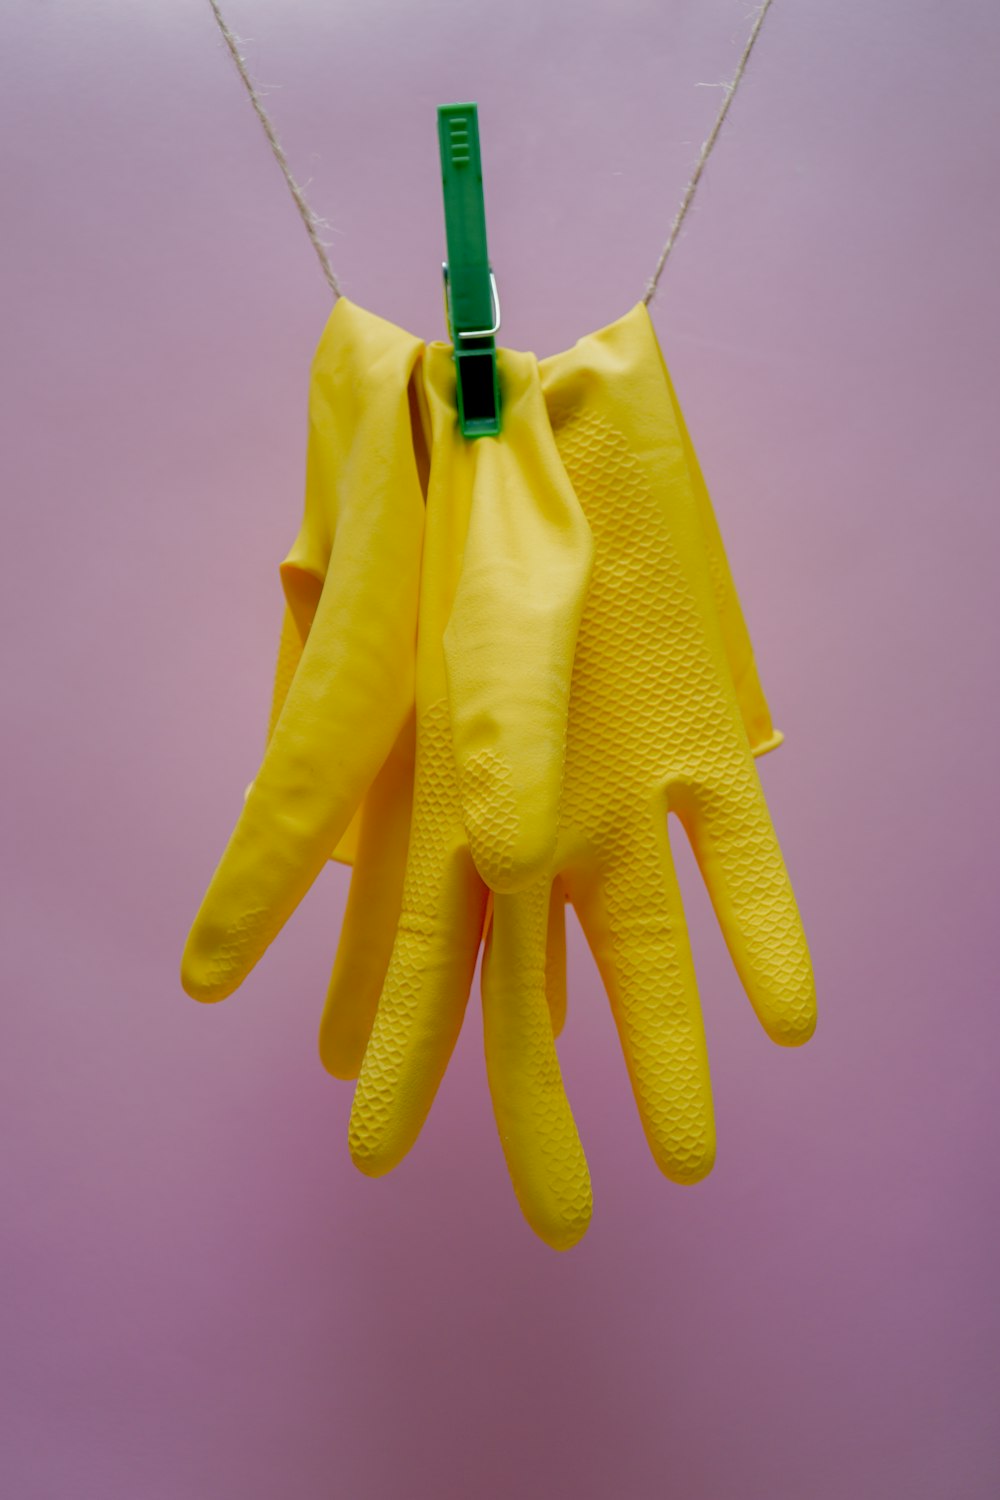 guantes amarillos en percha azul